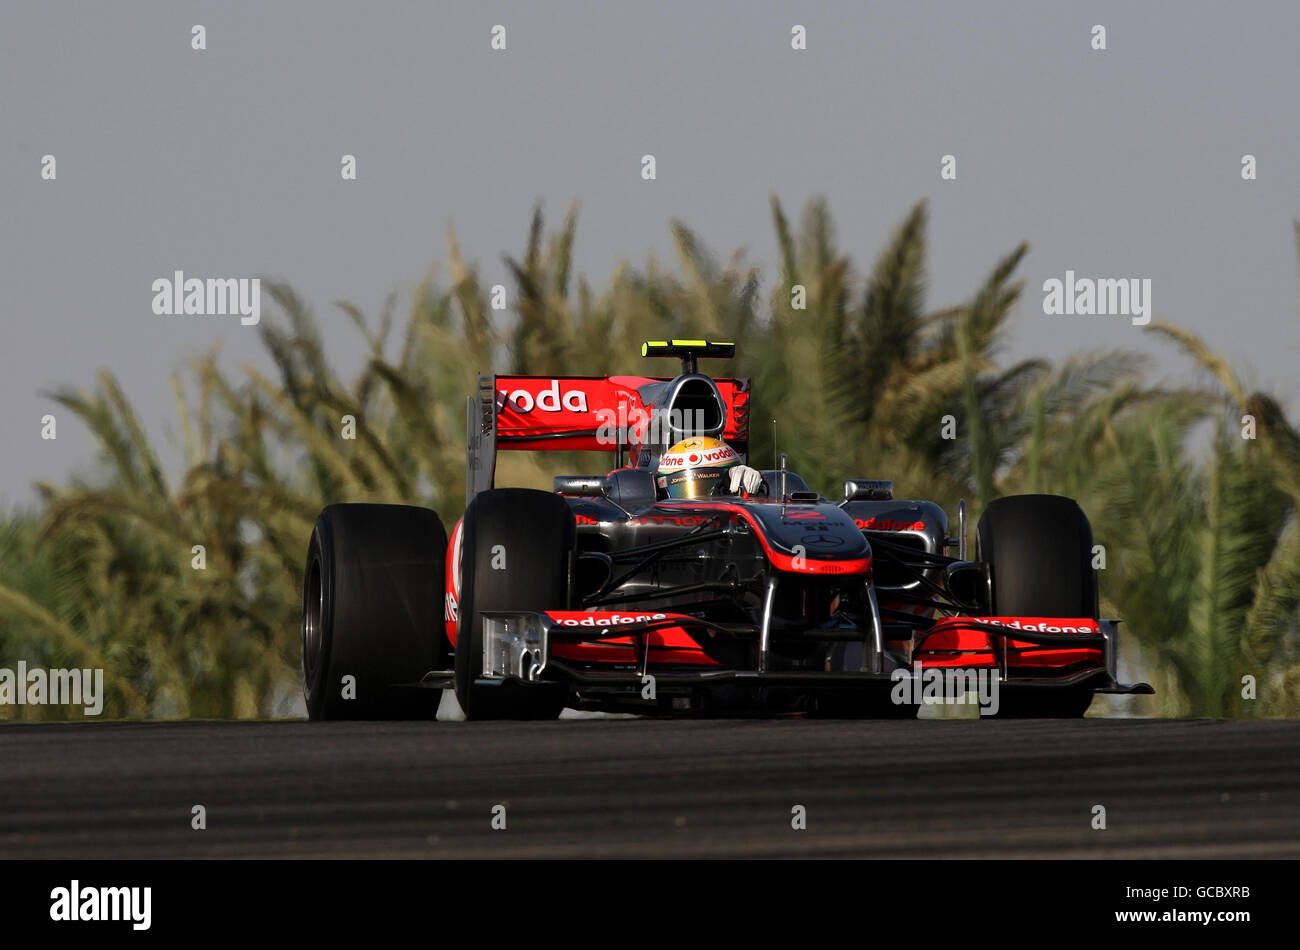 McLaren's Lewis Hamilton on his way to third place during the Gulf Air Bahrain Grand Prix at the Bahrain International Circuit in Sakhir, Bahrain. Stock Photo